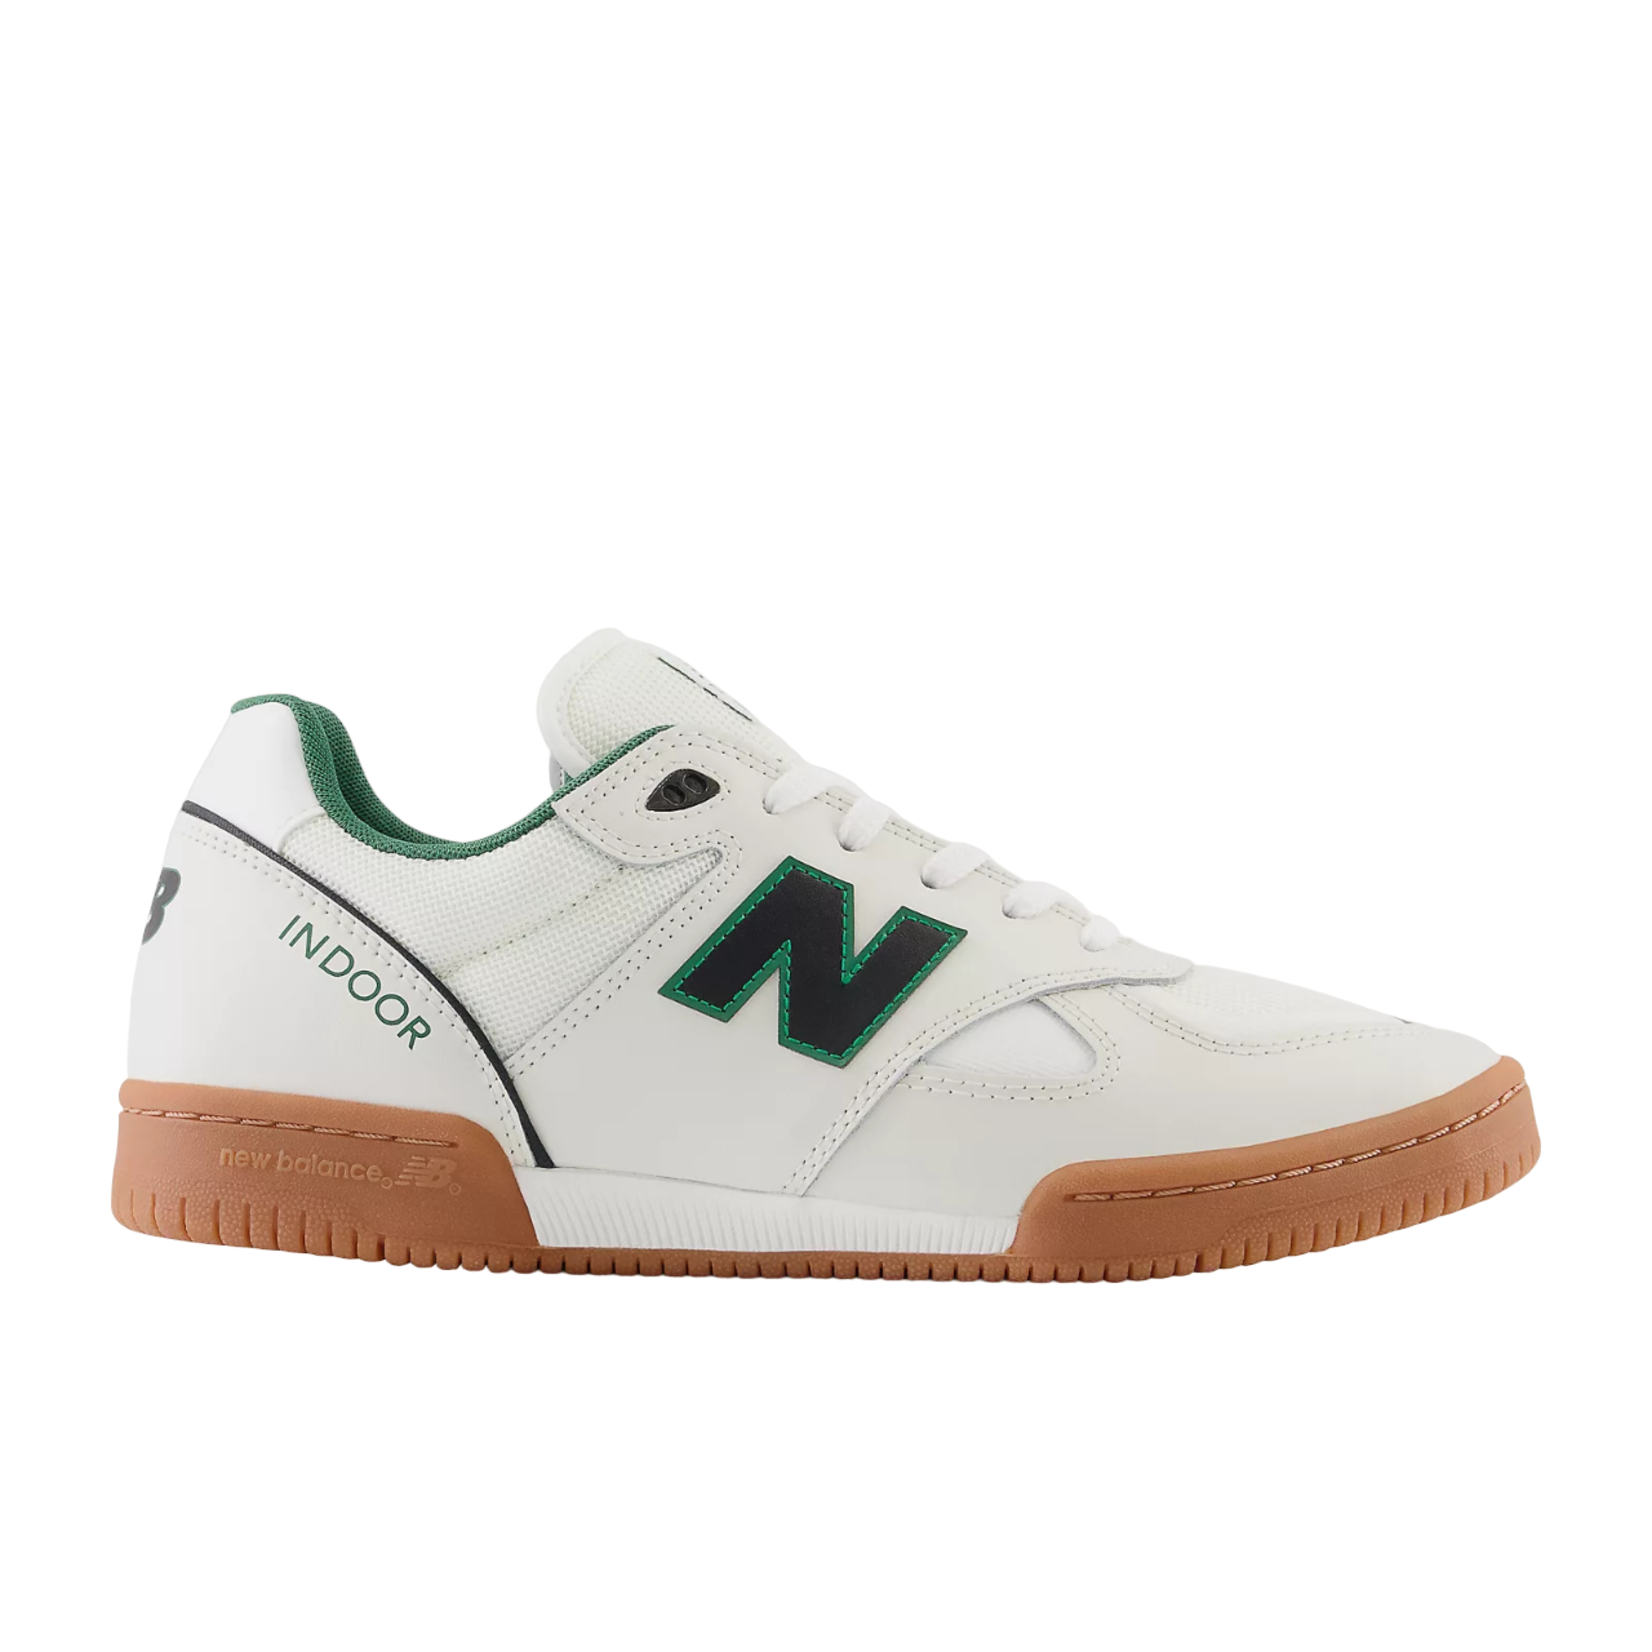 New Balance New Balance Numeric Tom Knox 600 Shoes - White/Green